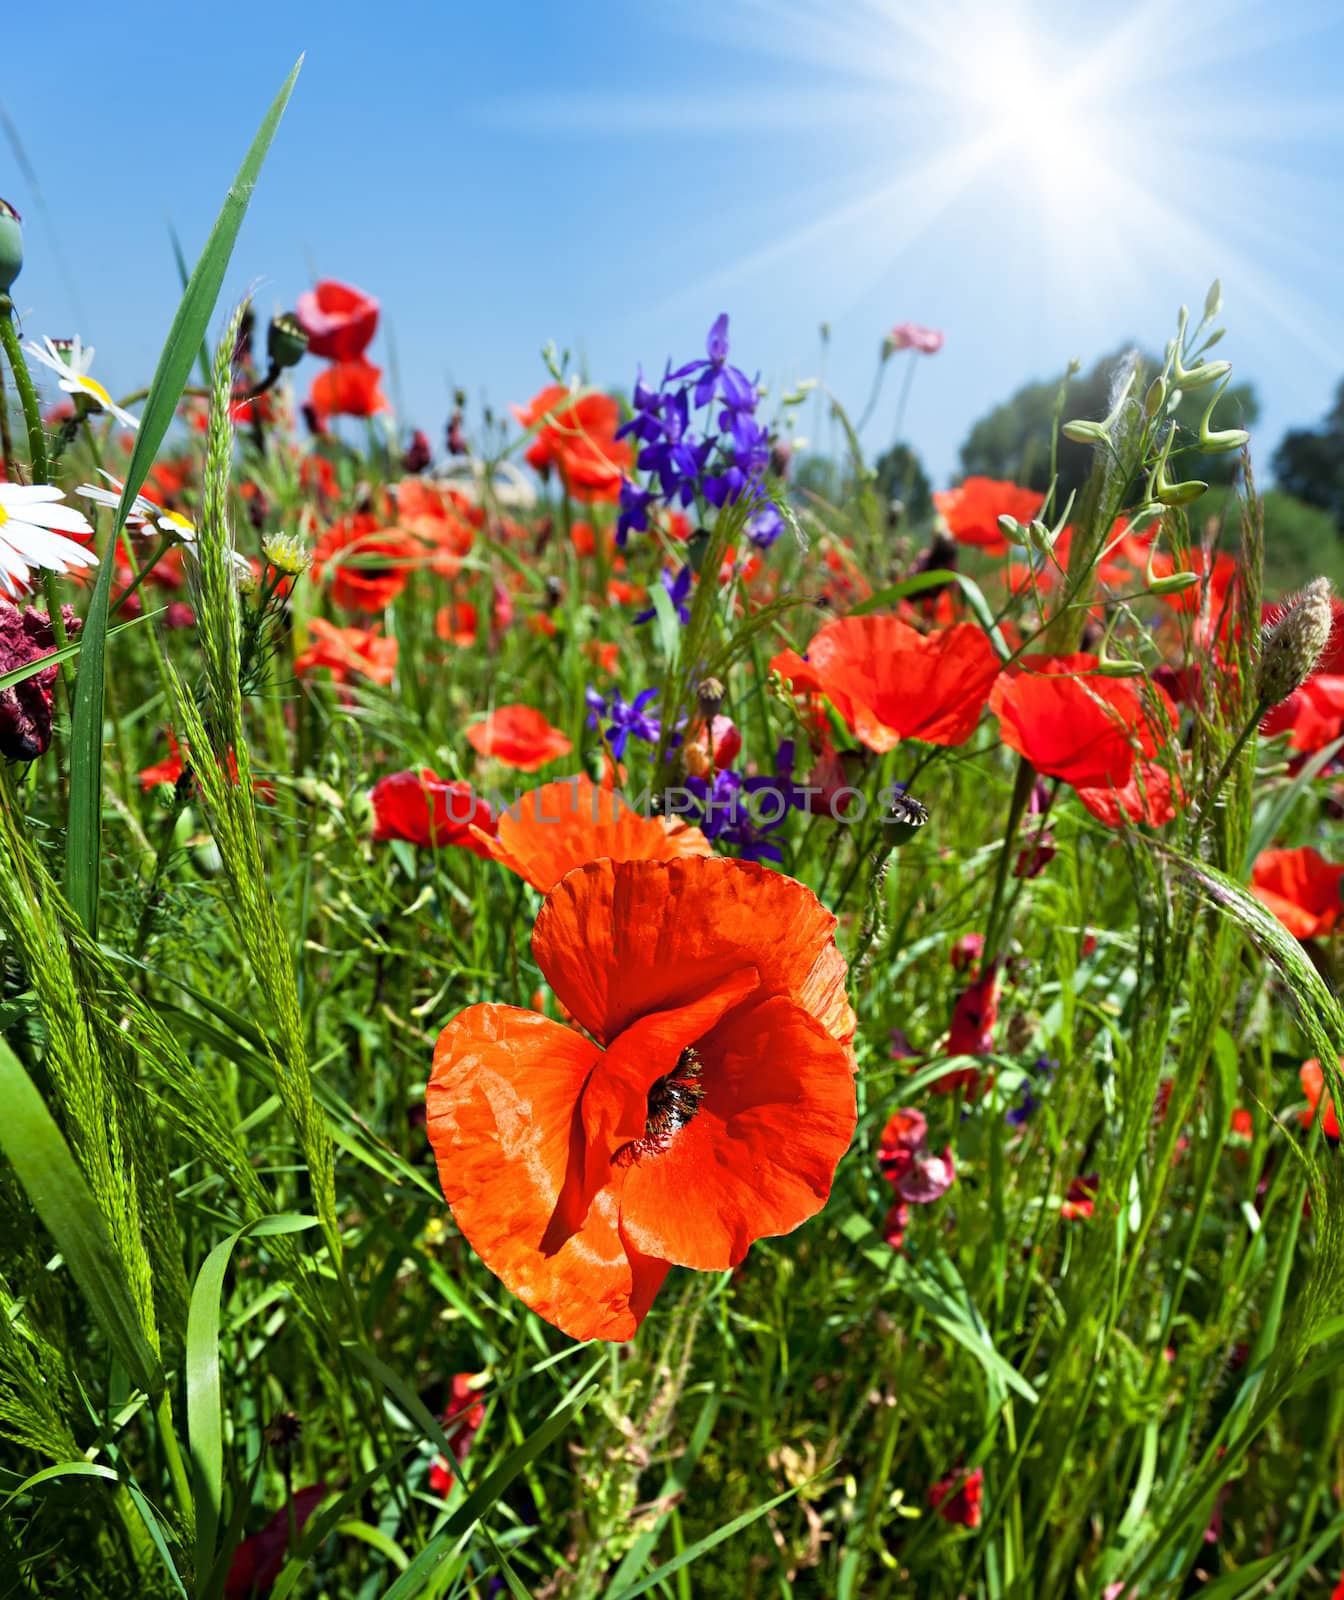 Poppy field background with sunlight